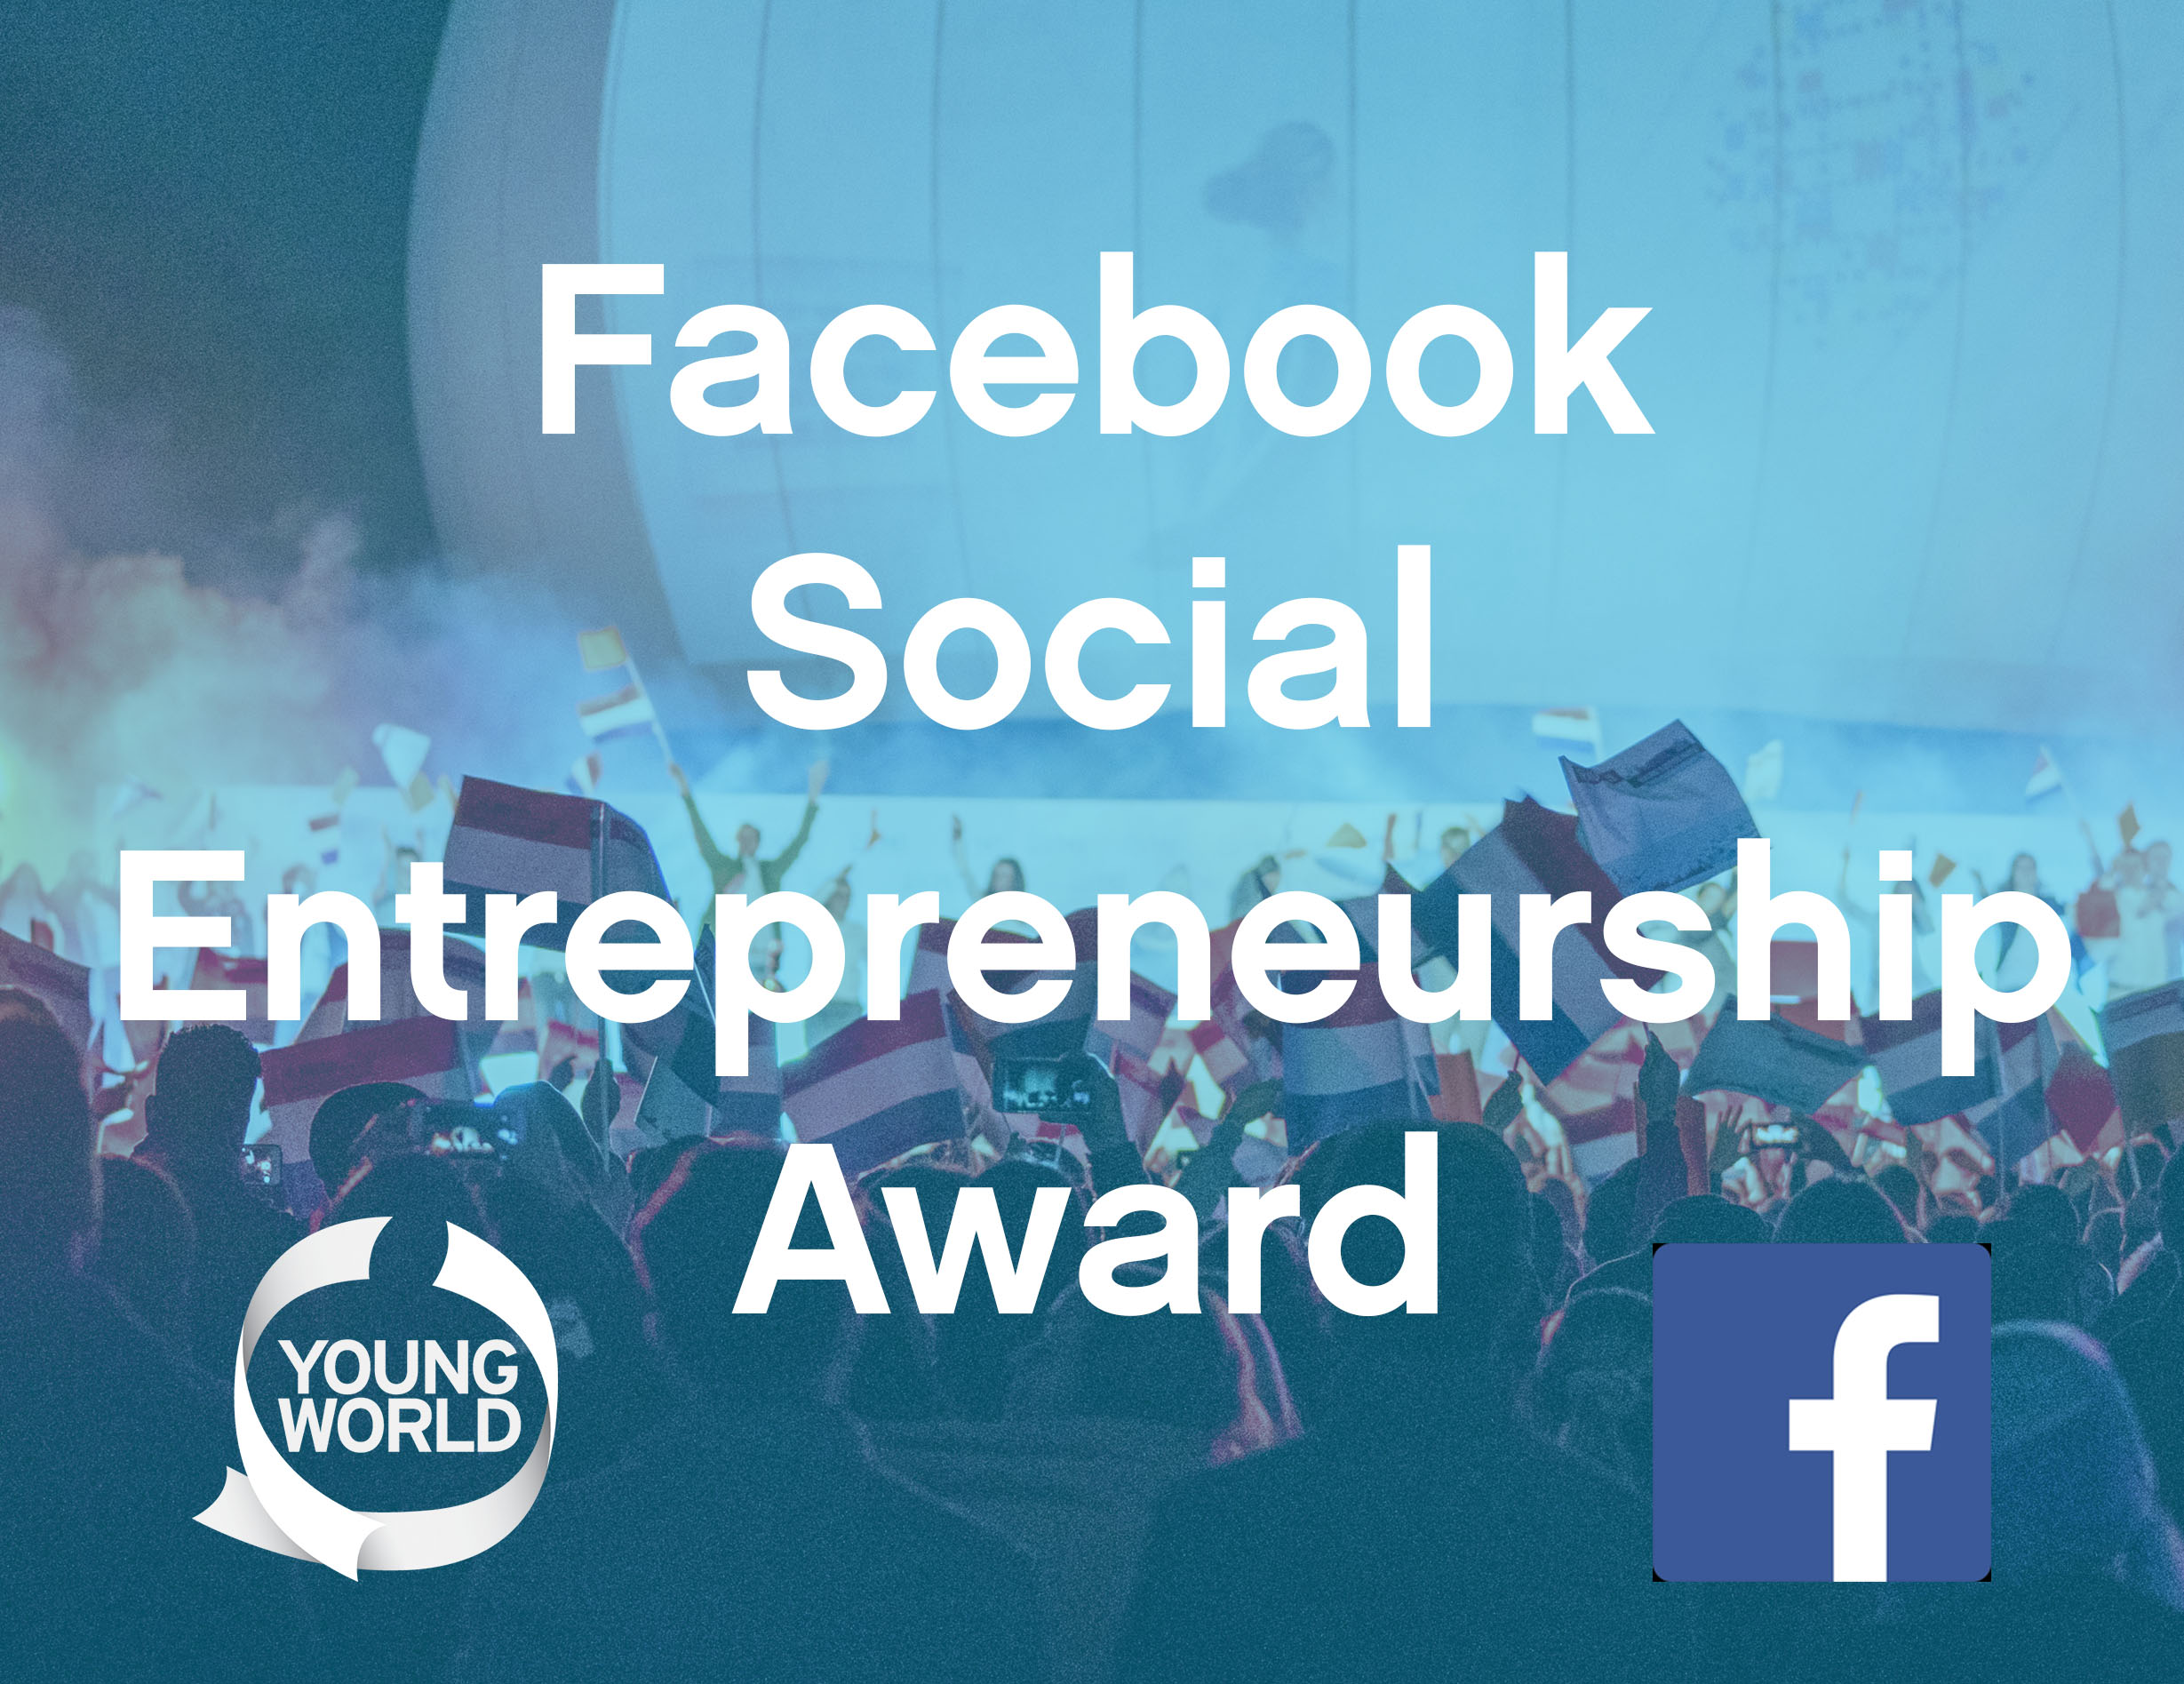 facebook social entrepreneurship award, facebook, social entrepreneurship, prize, award, mark zuckerberg, sheryl sandberg, funding, mentorship